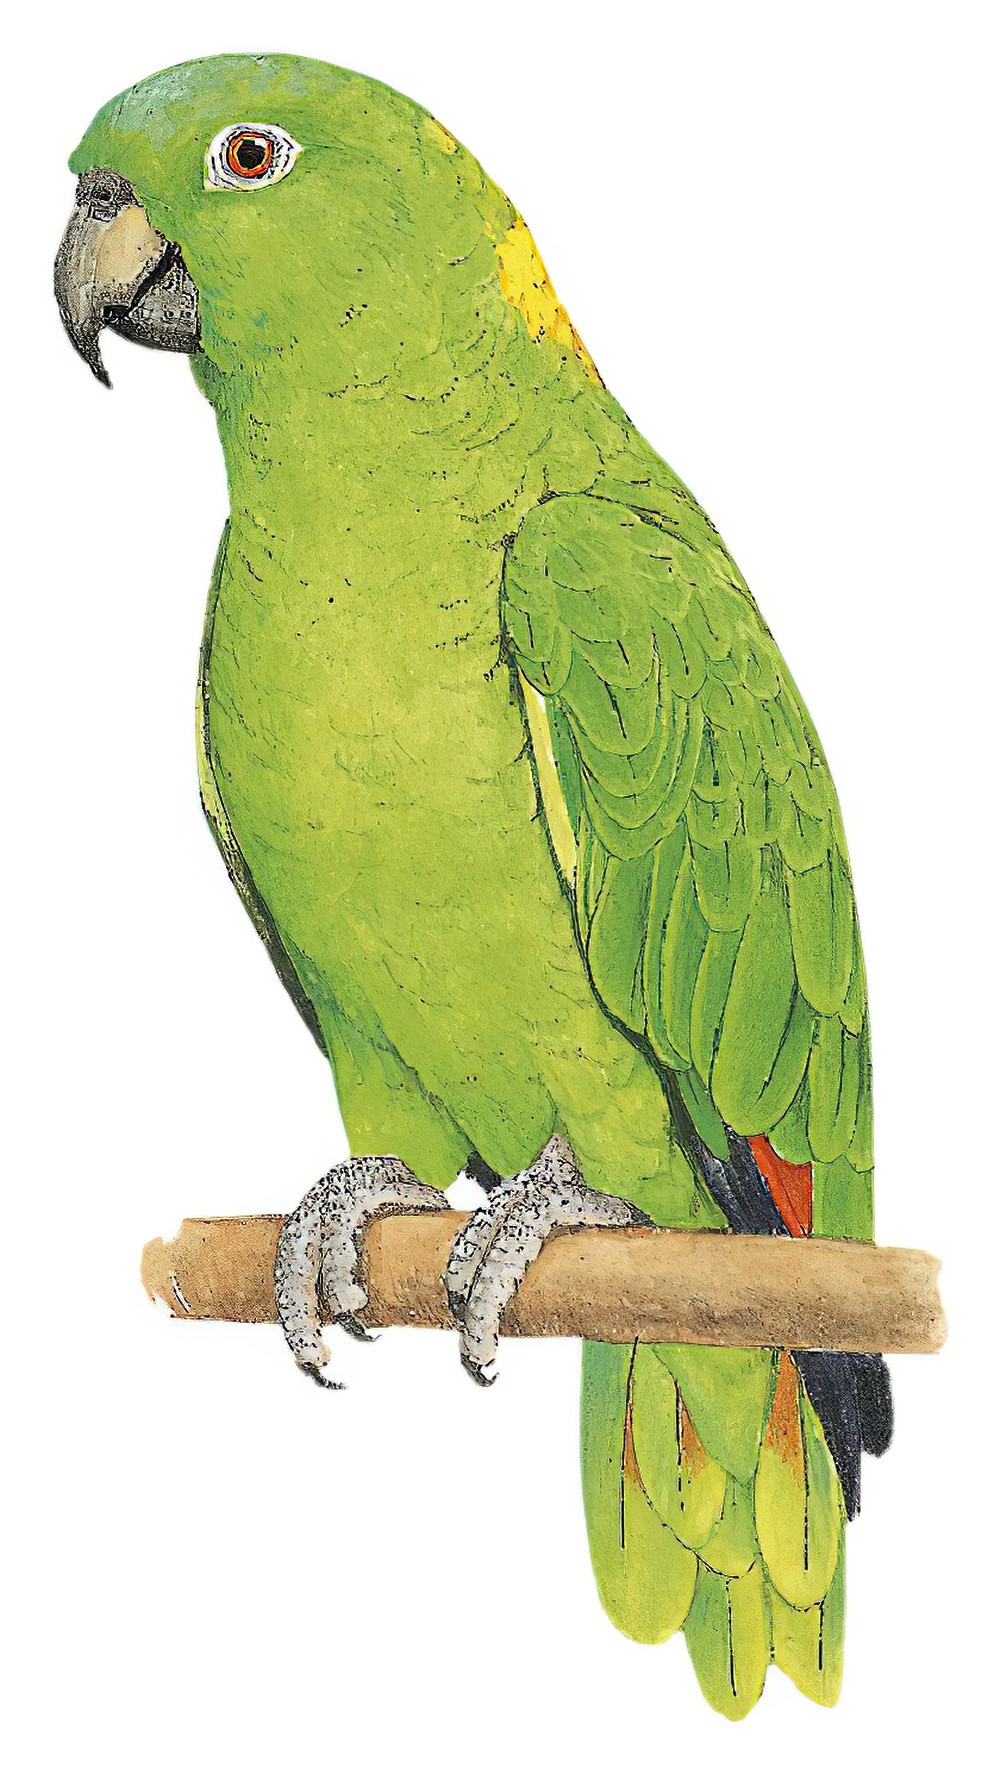 Yellow-naped Parrot / Amazona auropalliata